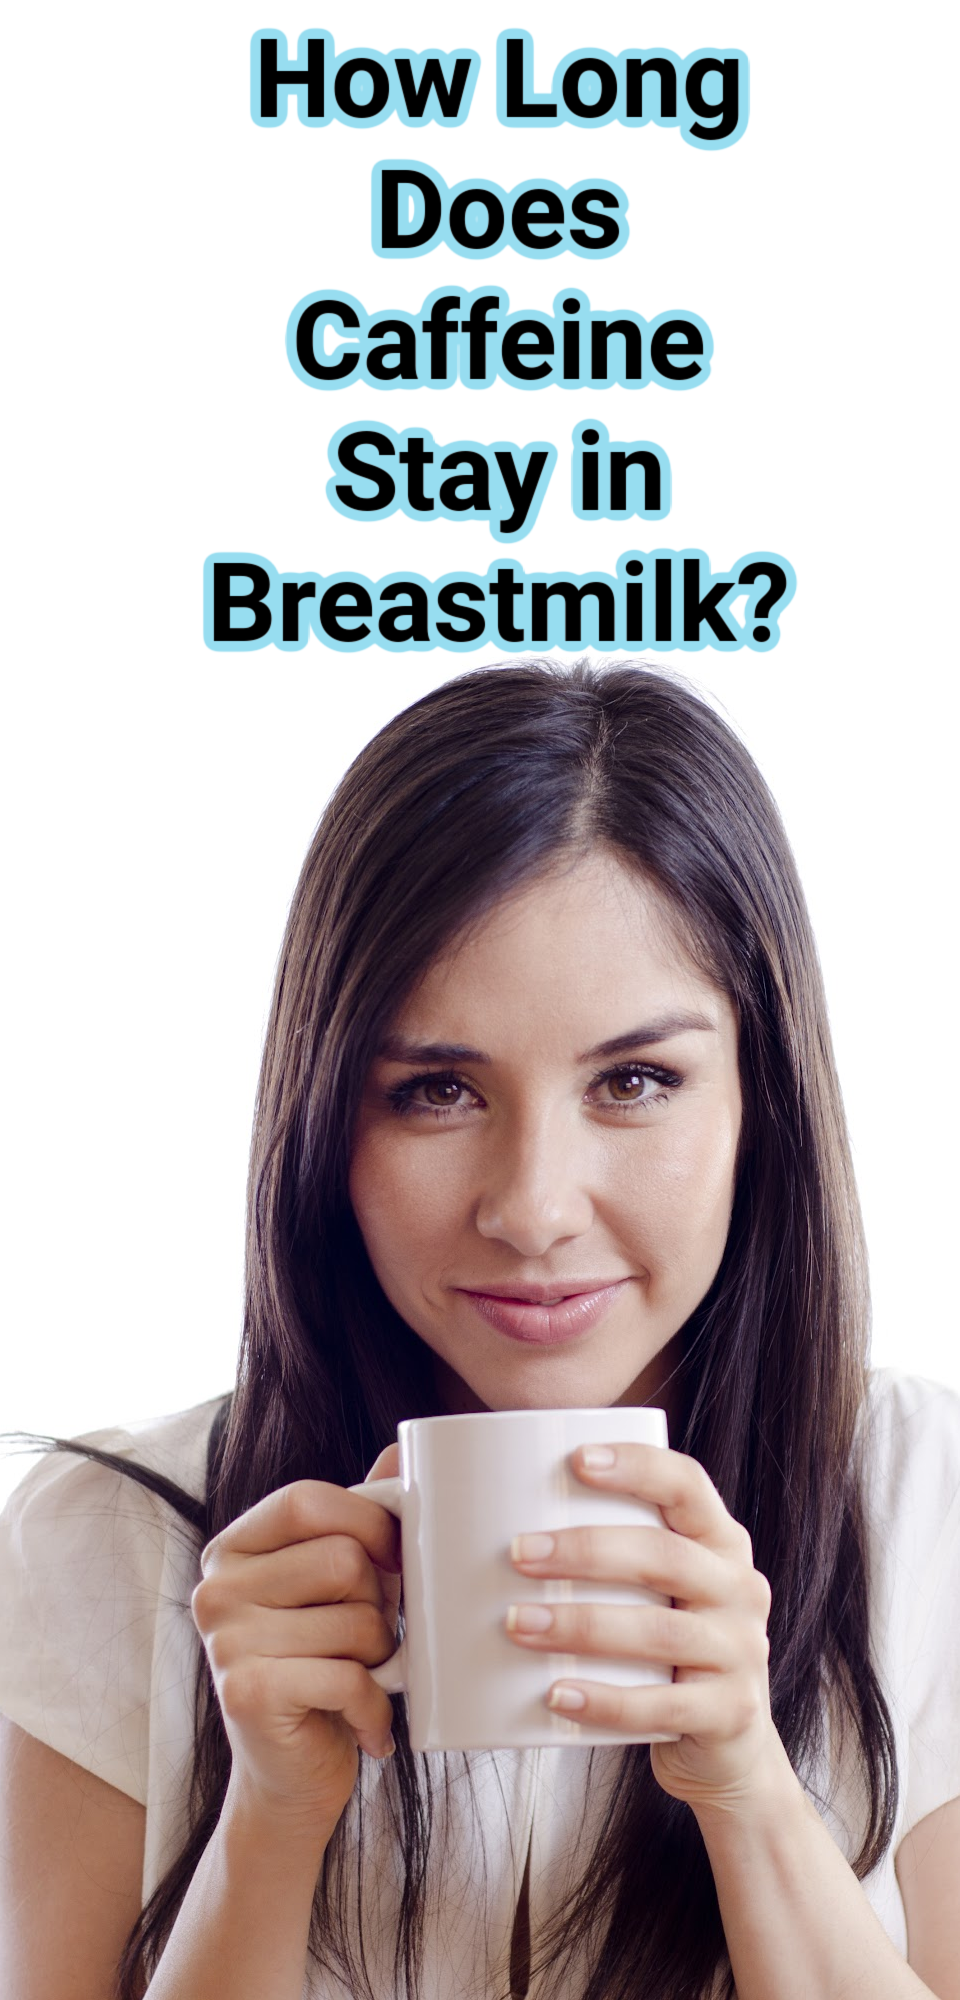 How Long Does Caffeine Stay In Breastmilk?